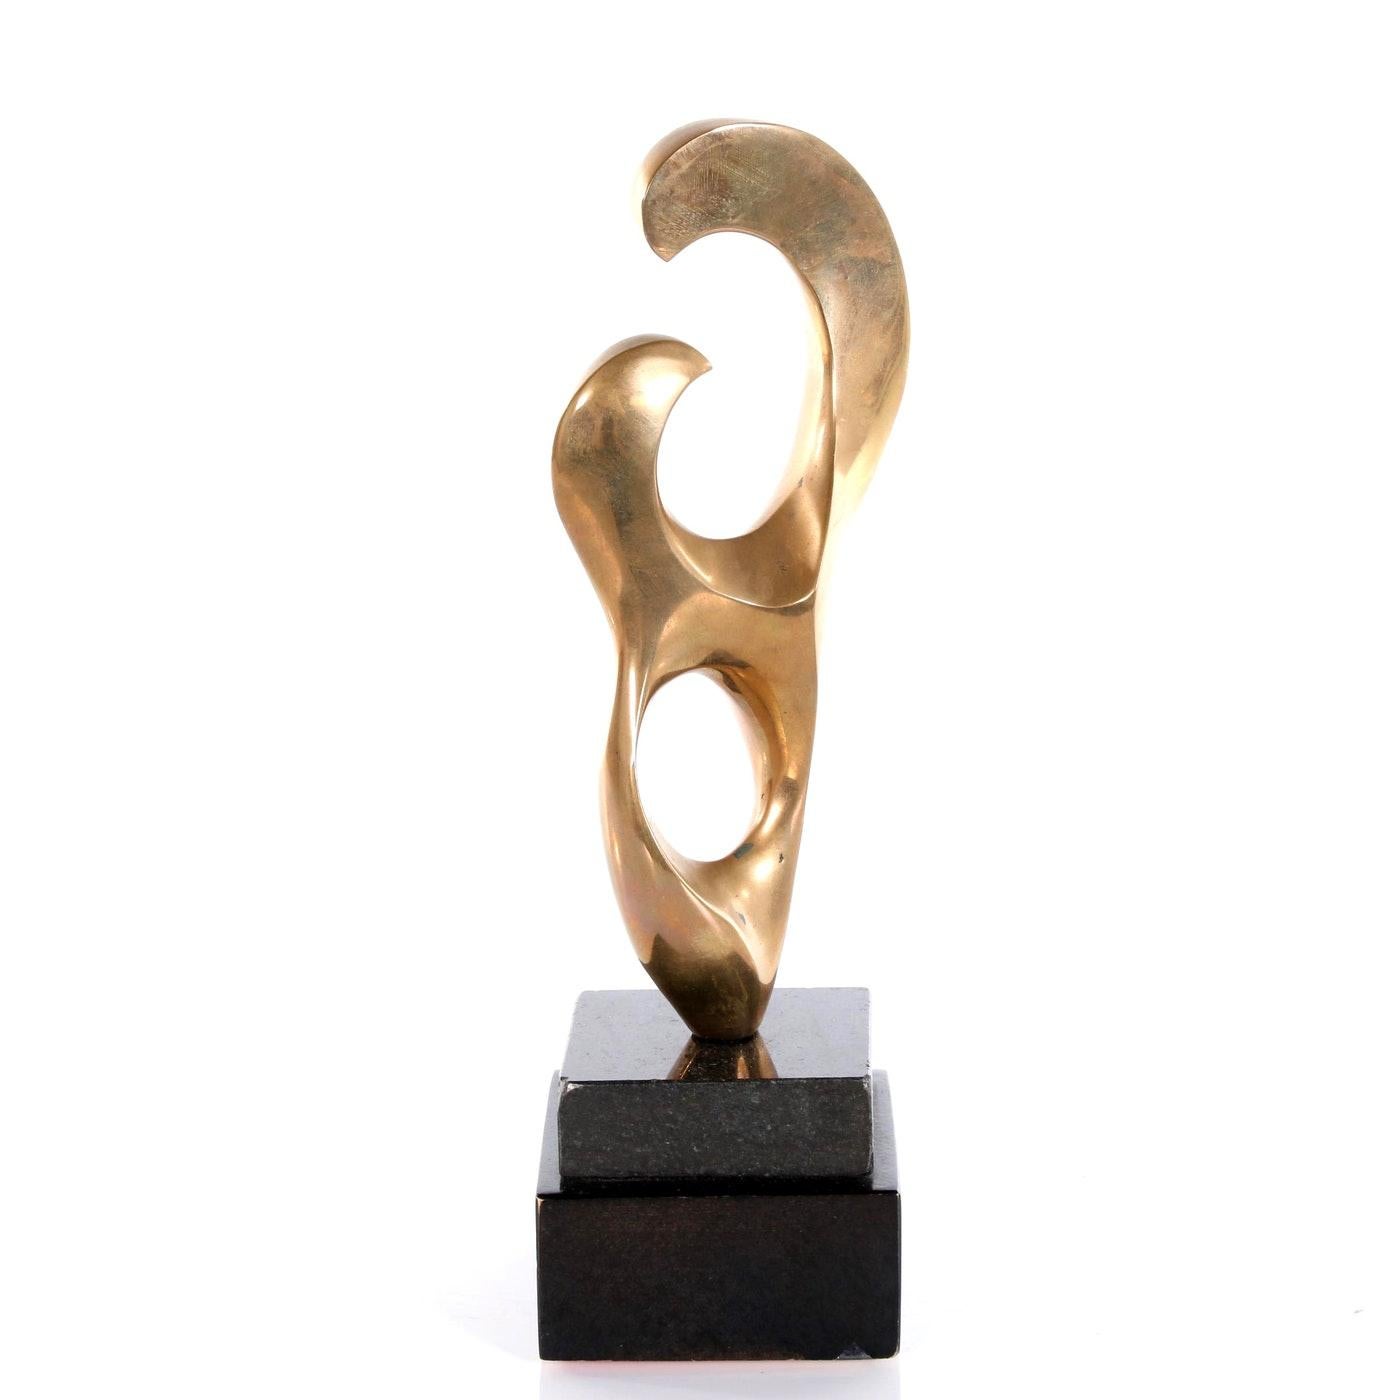 Grediaga Kieff Abstract Sculpture - Kieff Antonio Grediaga "Love I", abstract polished bronze sculpture